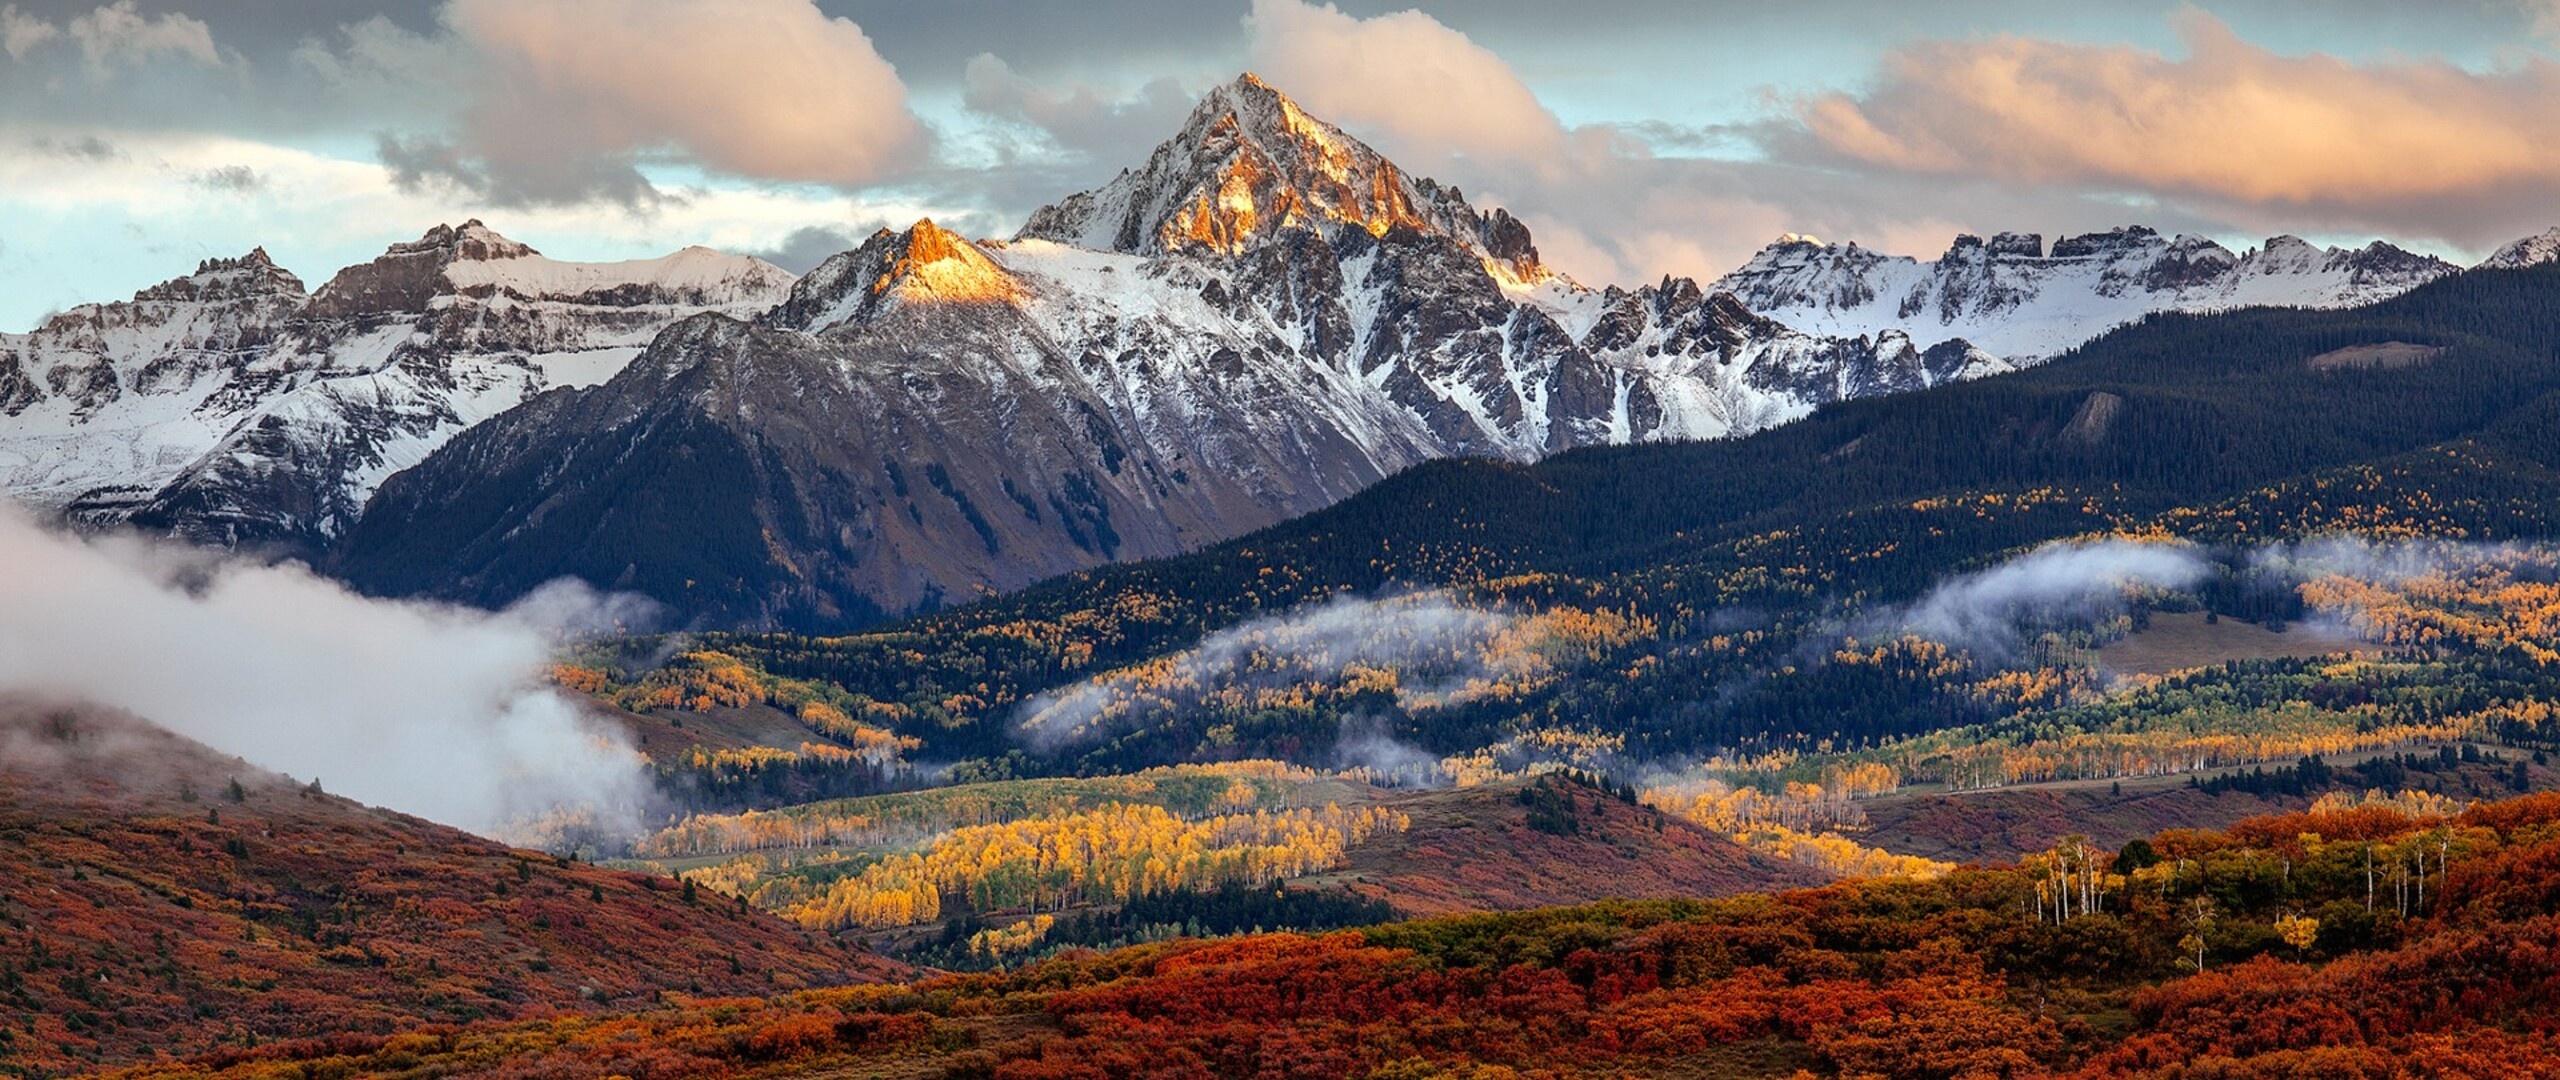 Colorado landscapes, Majestic mountains, Nature's beauty, Scenic views, 2560x1080 Dual Screen Desktop